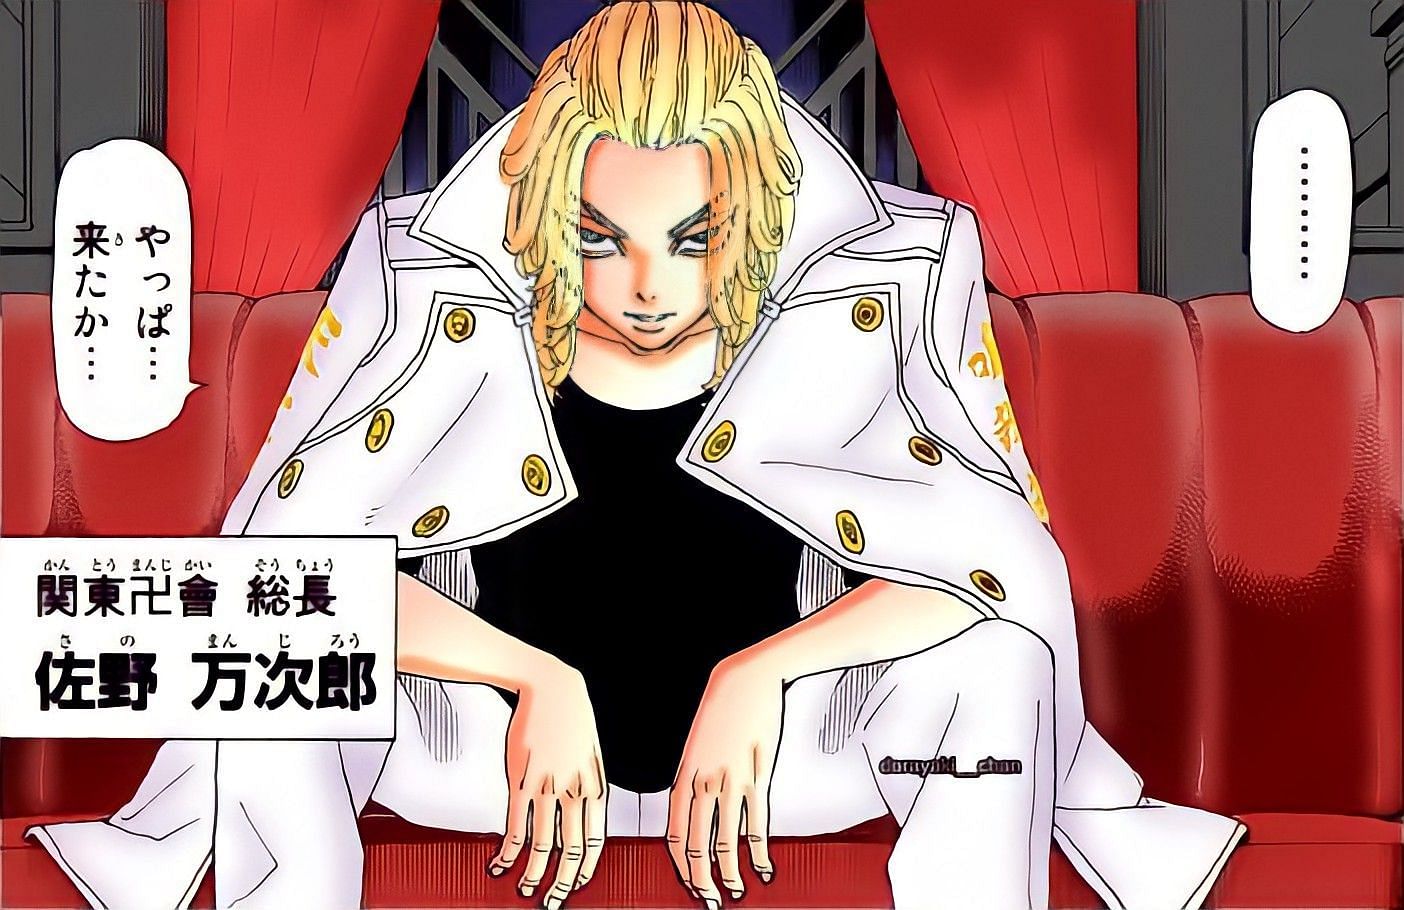 Mikey in Tokyo Revengers chapter 243 (Image via Kodansha, colored by doriyaki_chan)